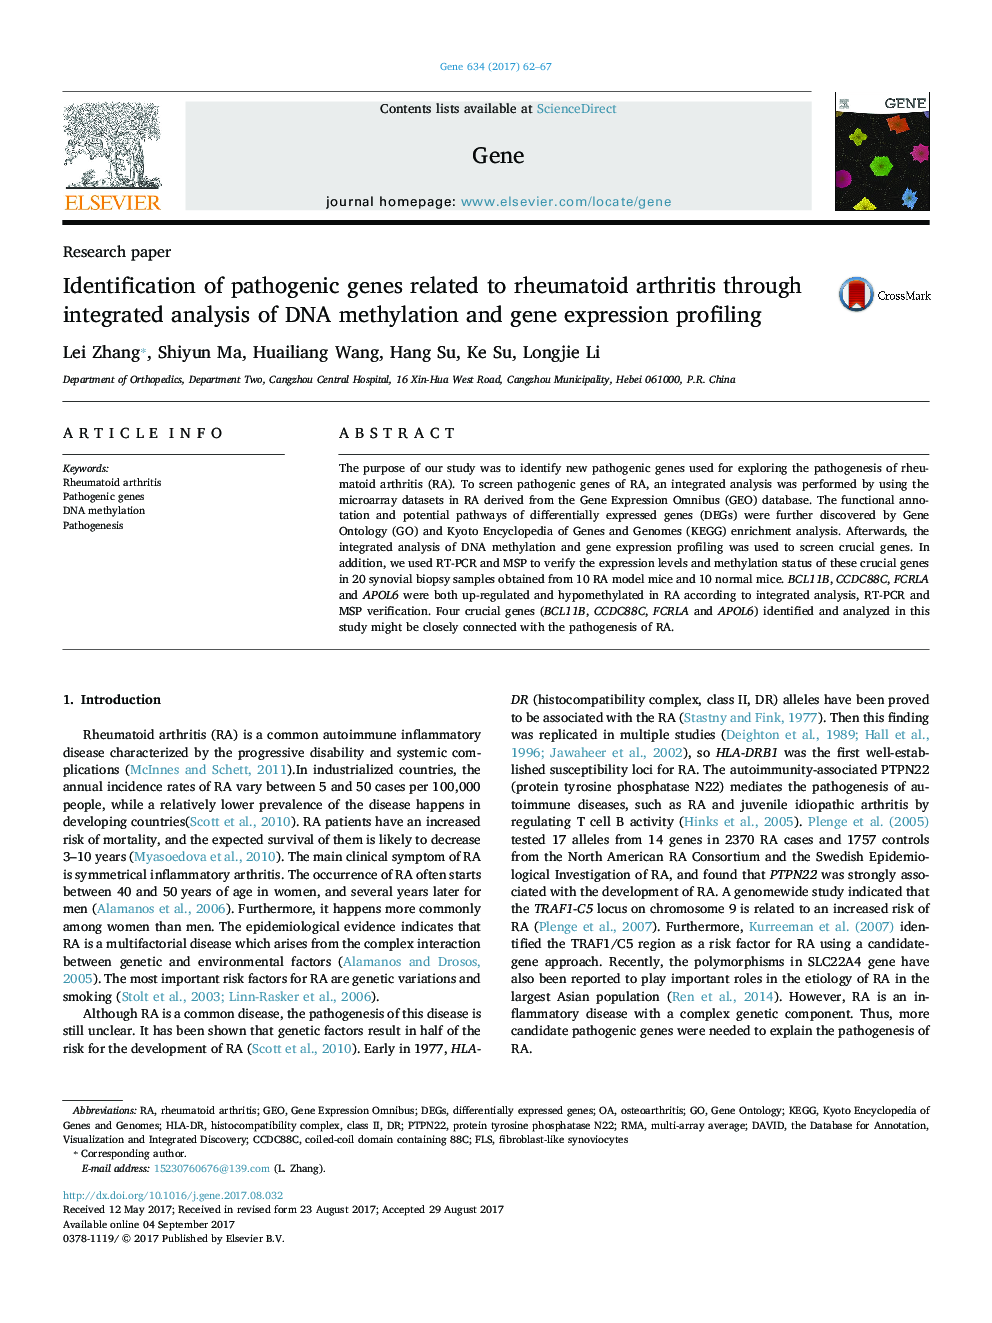 Identification of pathogenic genes related to rheumatoid arthritis through integrated analysis of DNA methylation and gene expression profiling